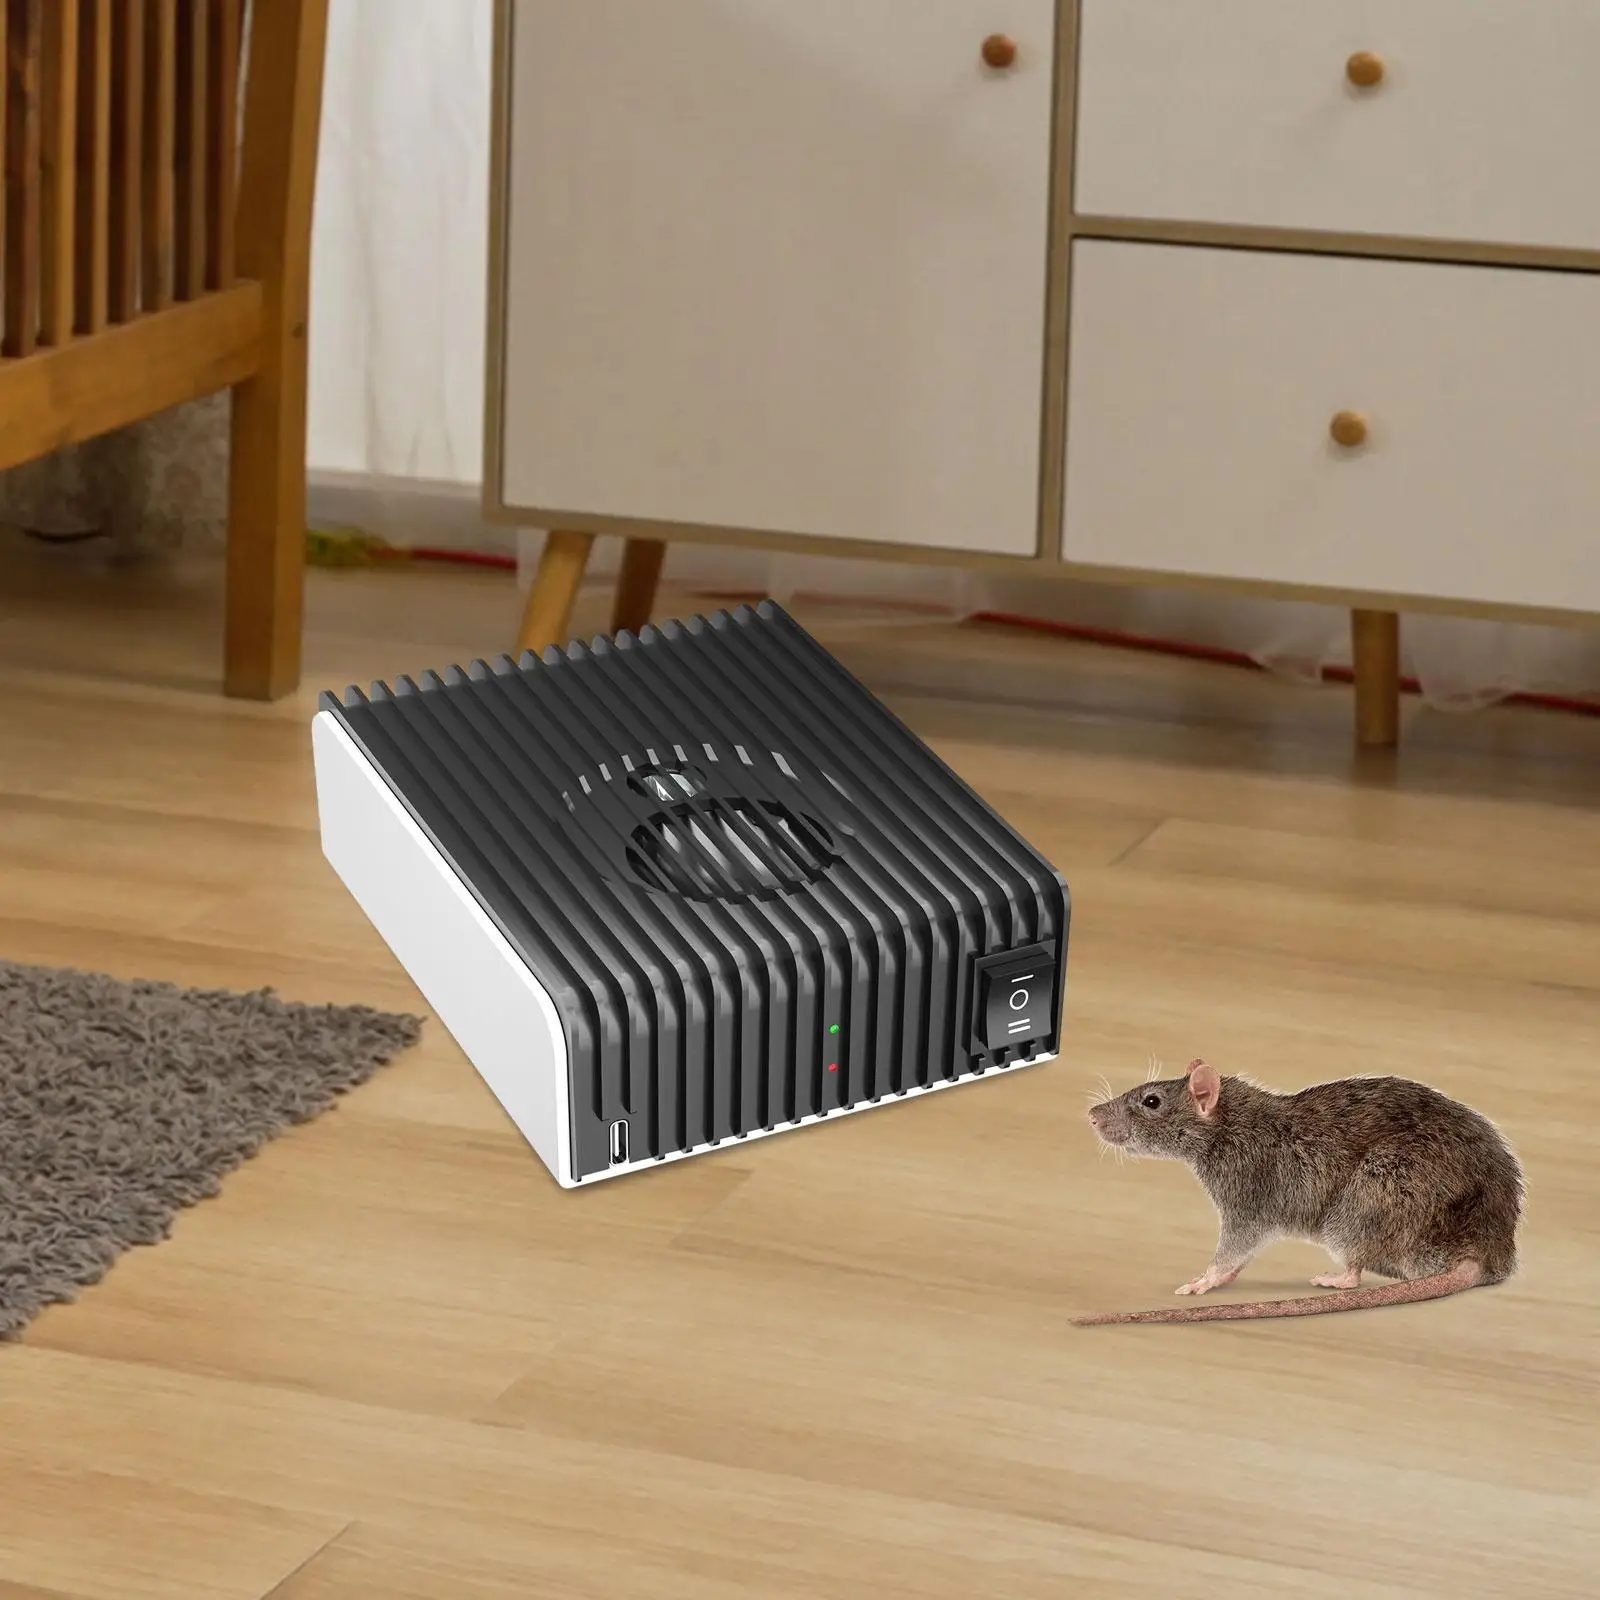 Sound Mouse Repeller 360 Degrees Mouse Deterrent for Car Garage Home